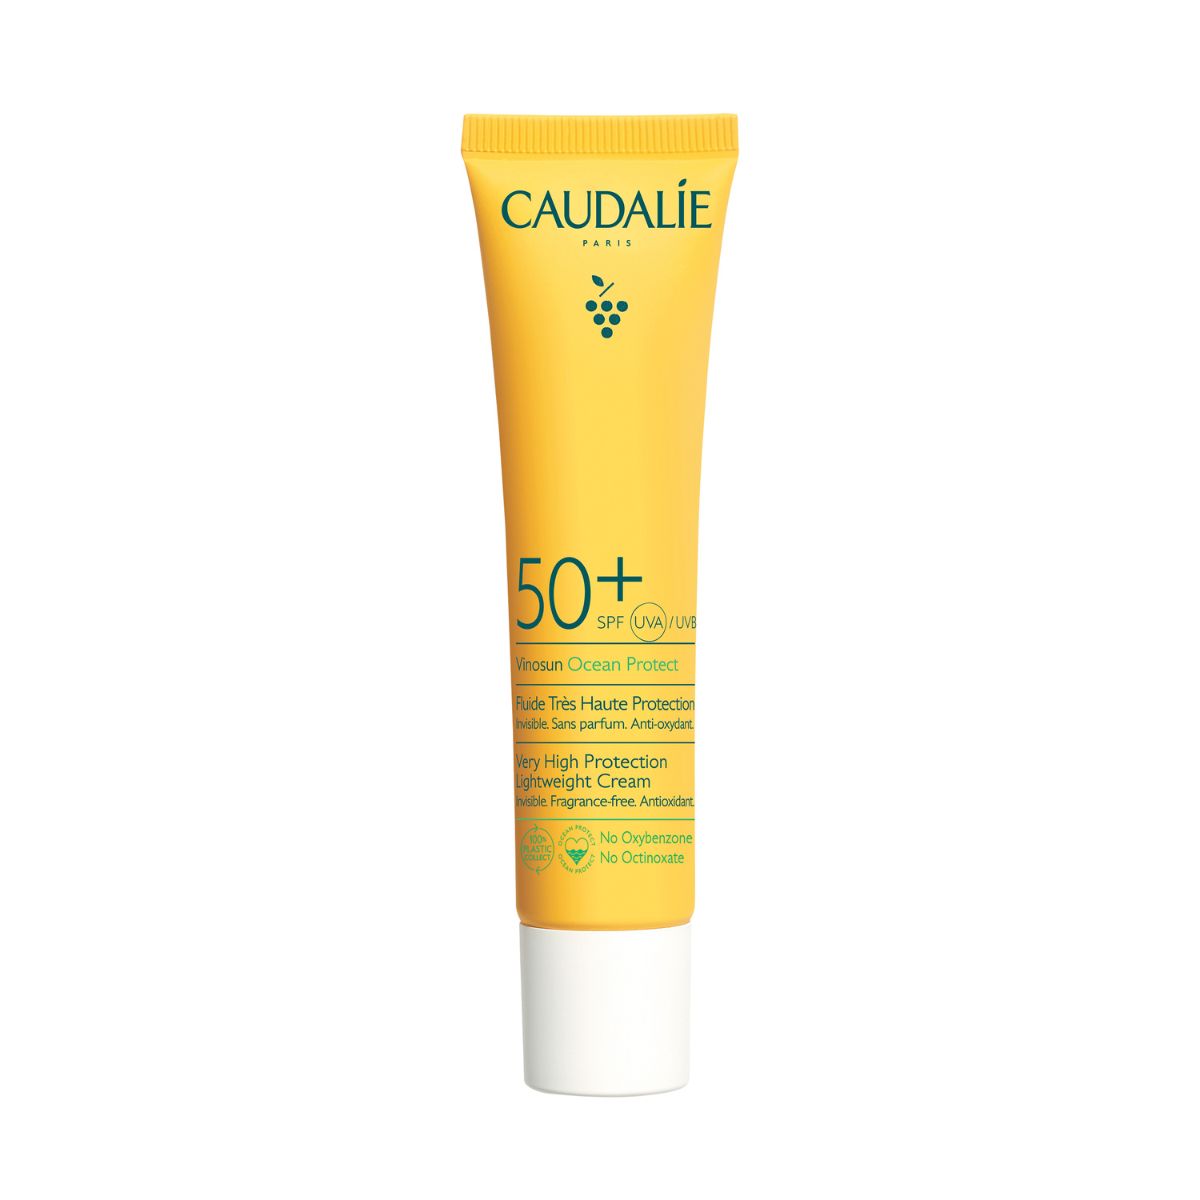 Caudalie Vinosun Very High Protection Lightweight Cream SPF 50+ Face and Neck